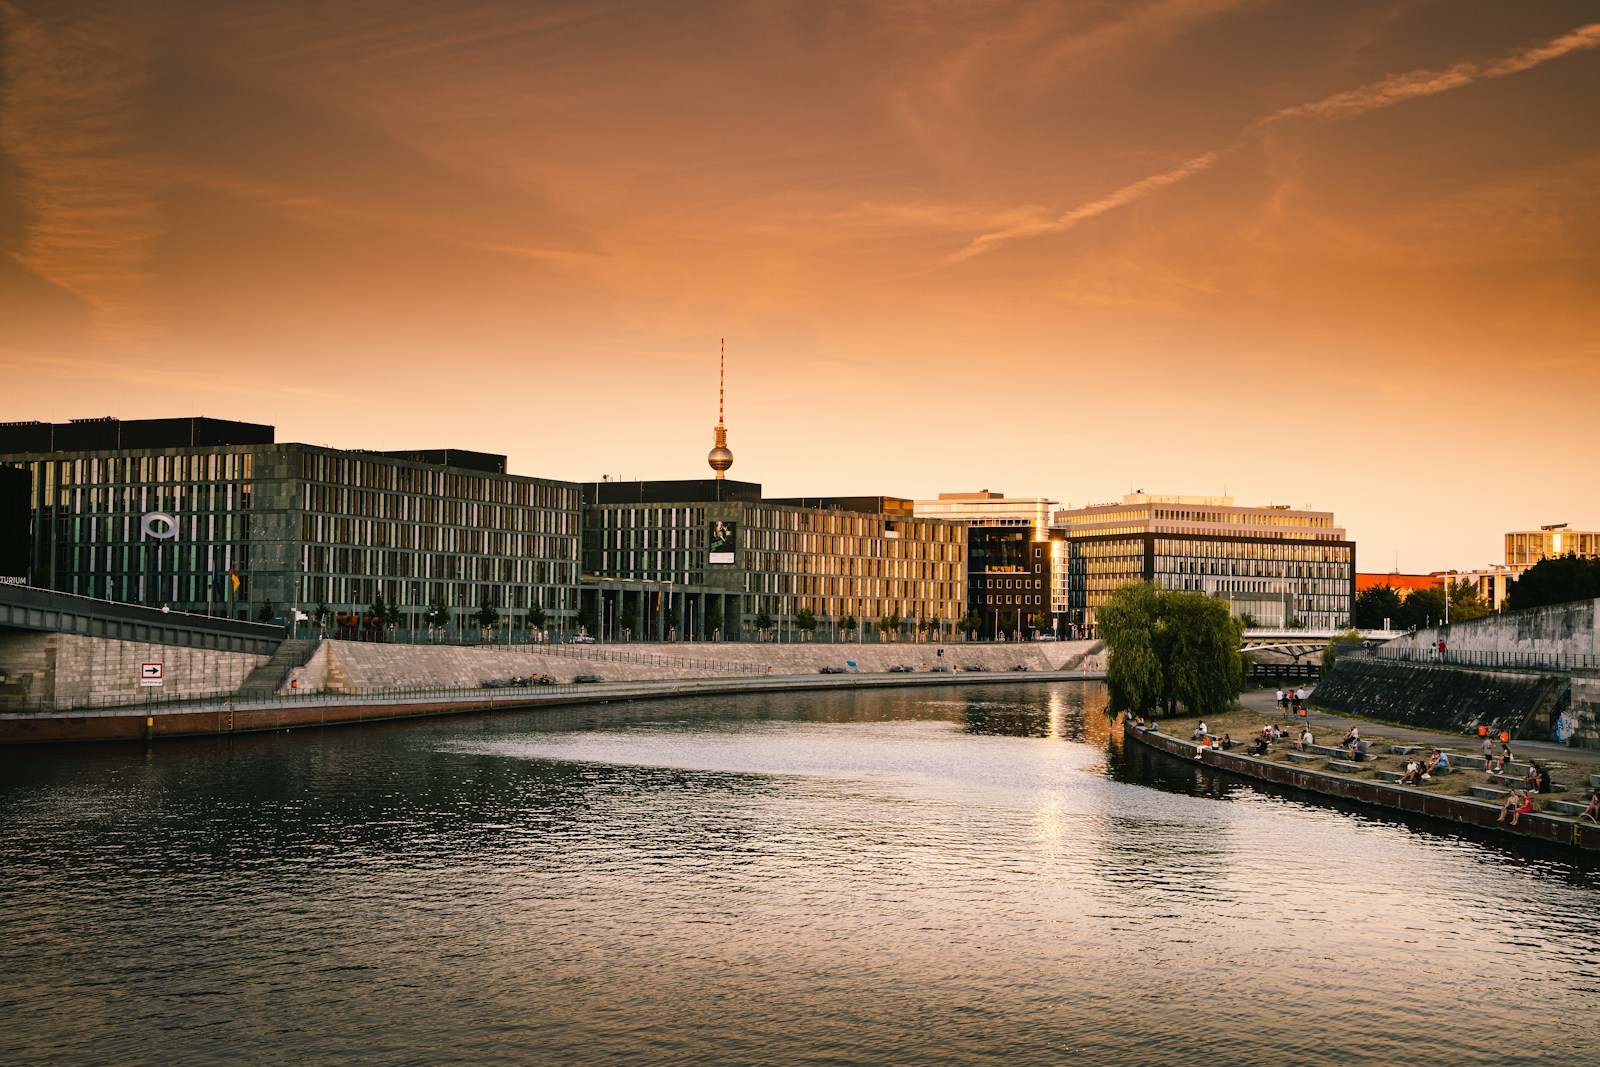 Berlin body of water between buildings during sunset